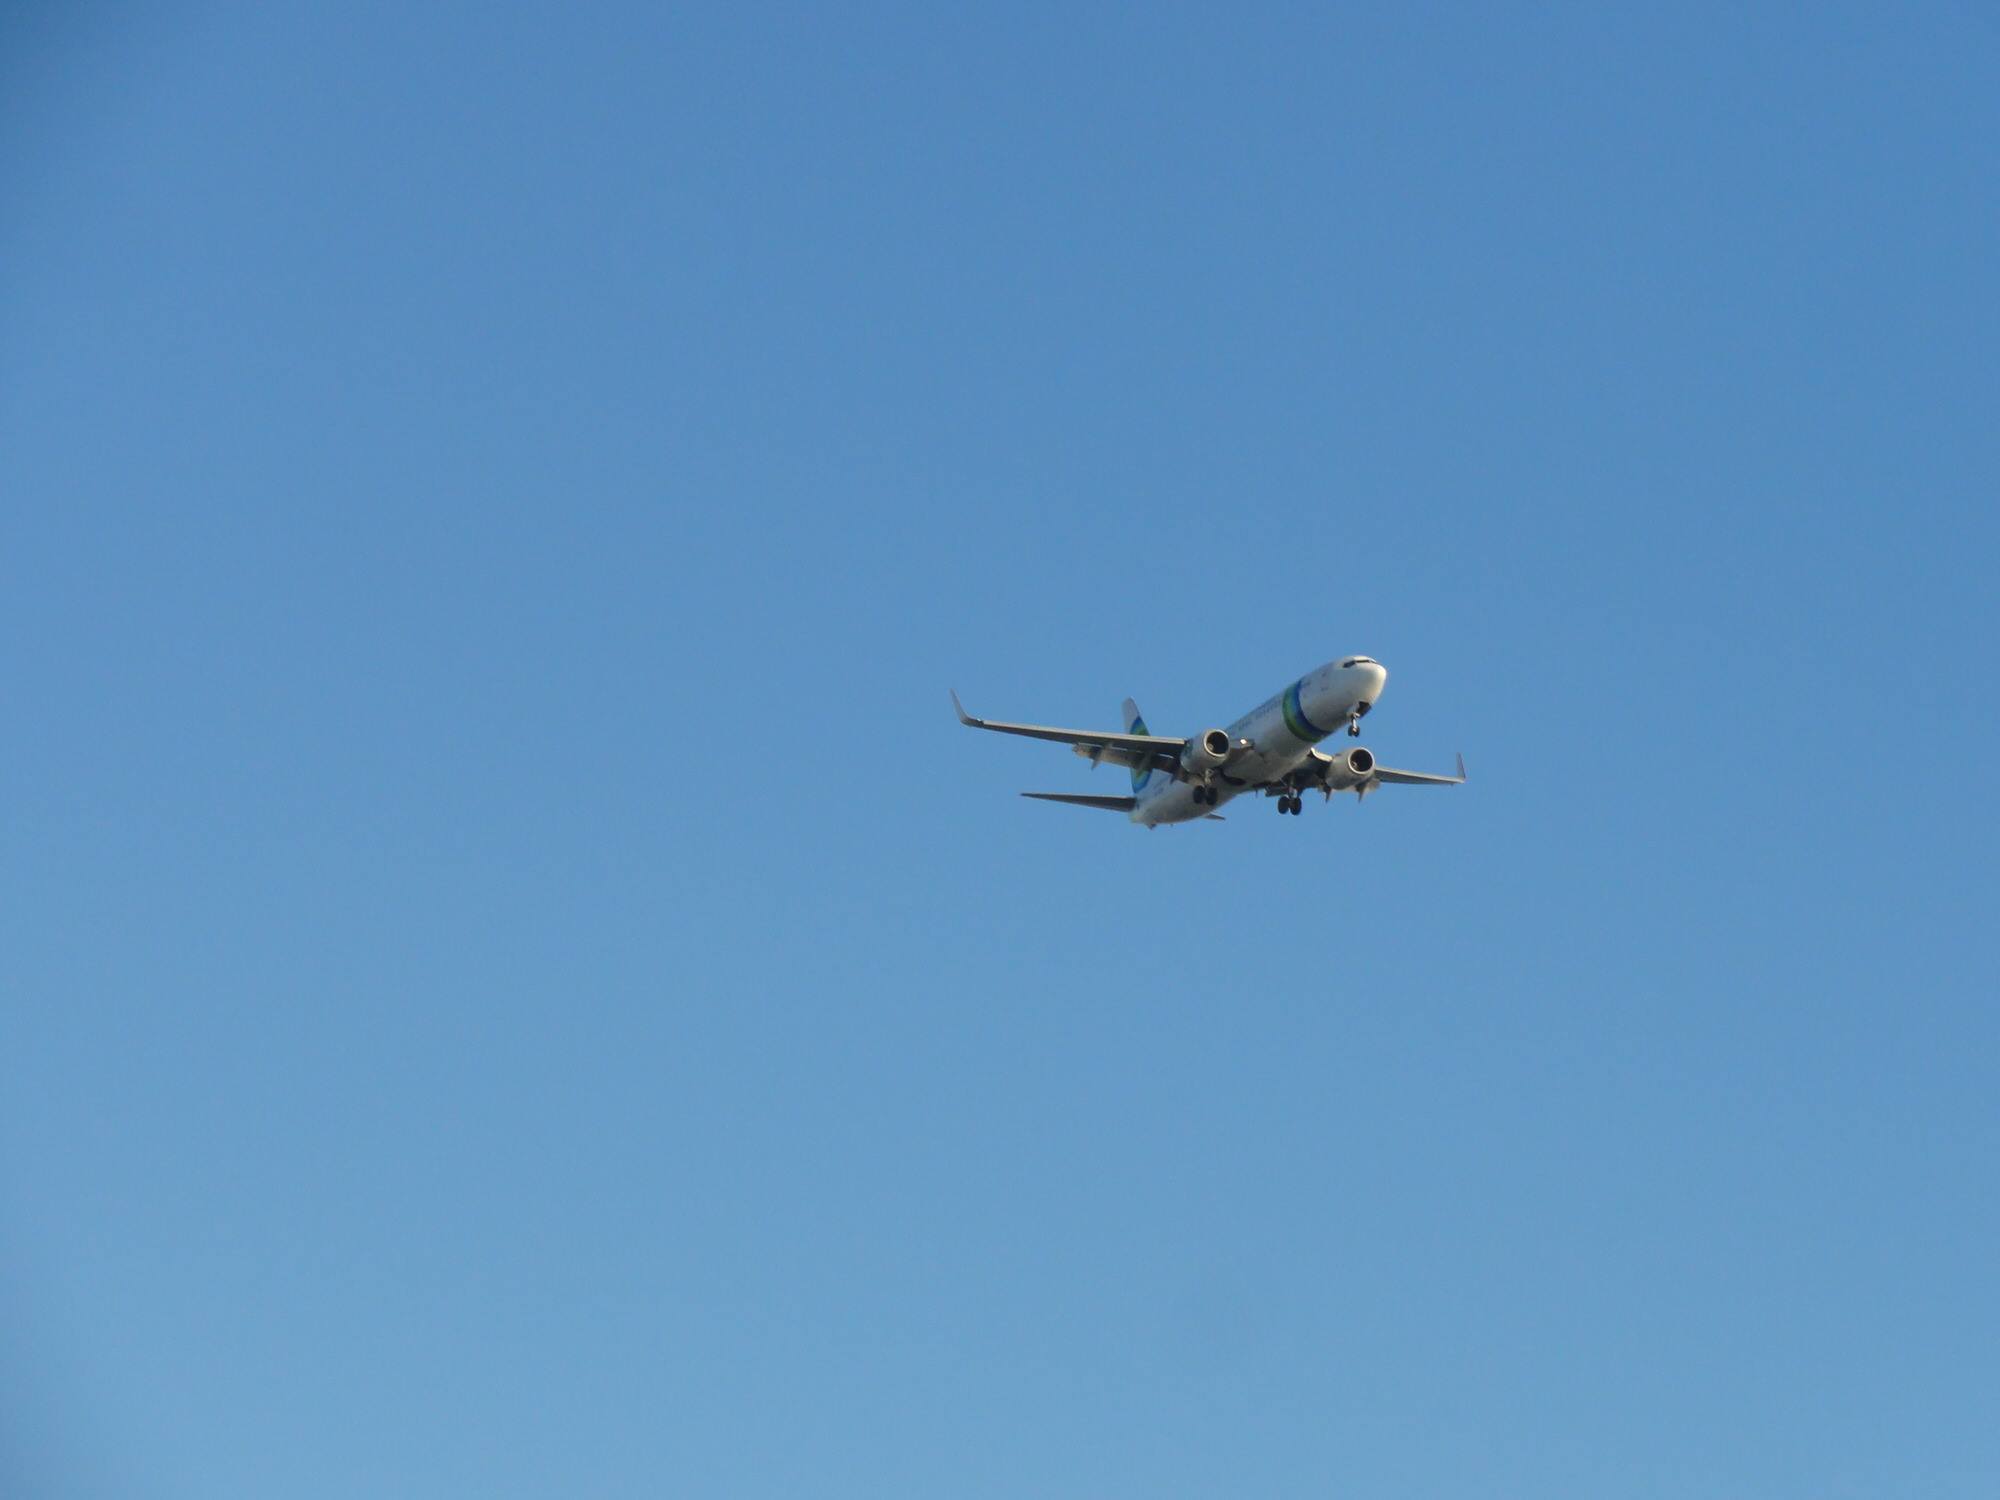 Plane flying in blue sky.